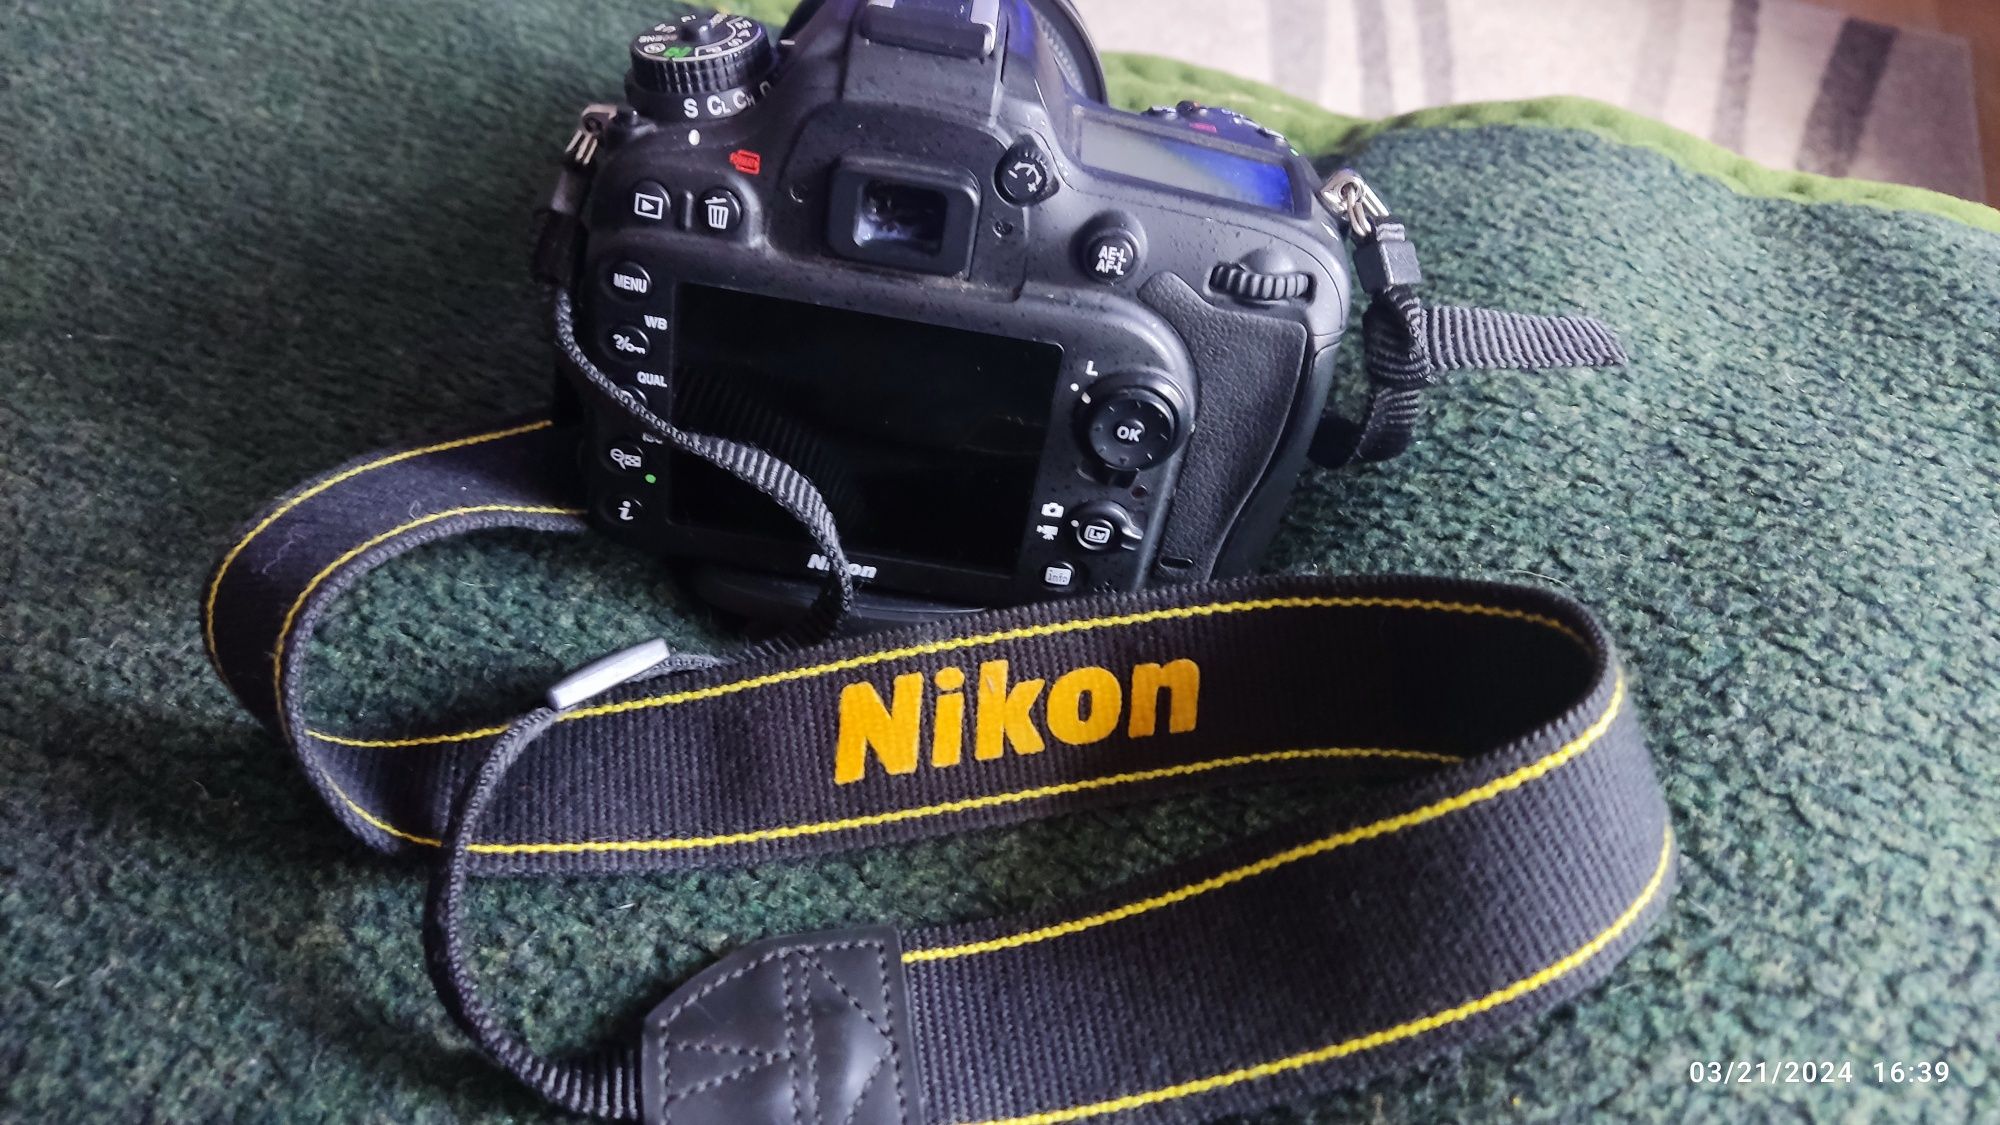 Nikon D7100 + Sigma 10-20mm